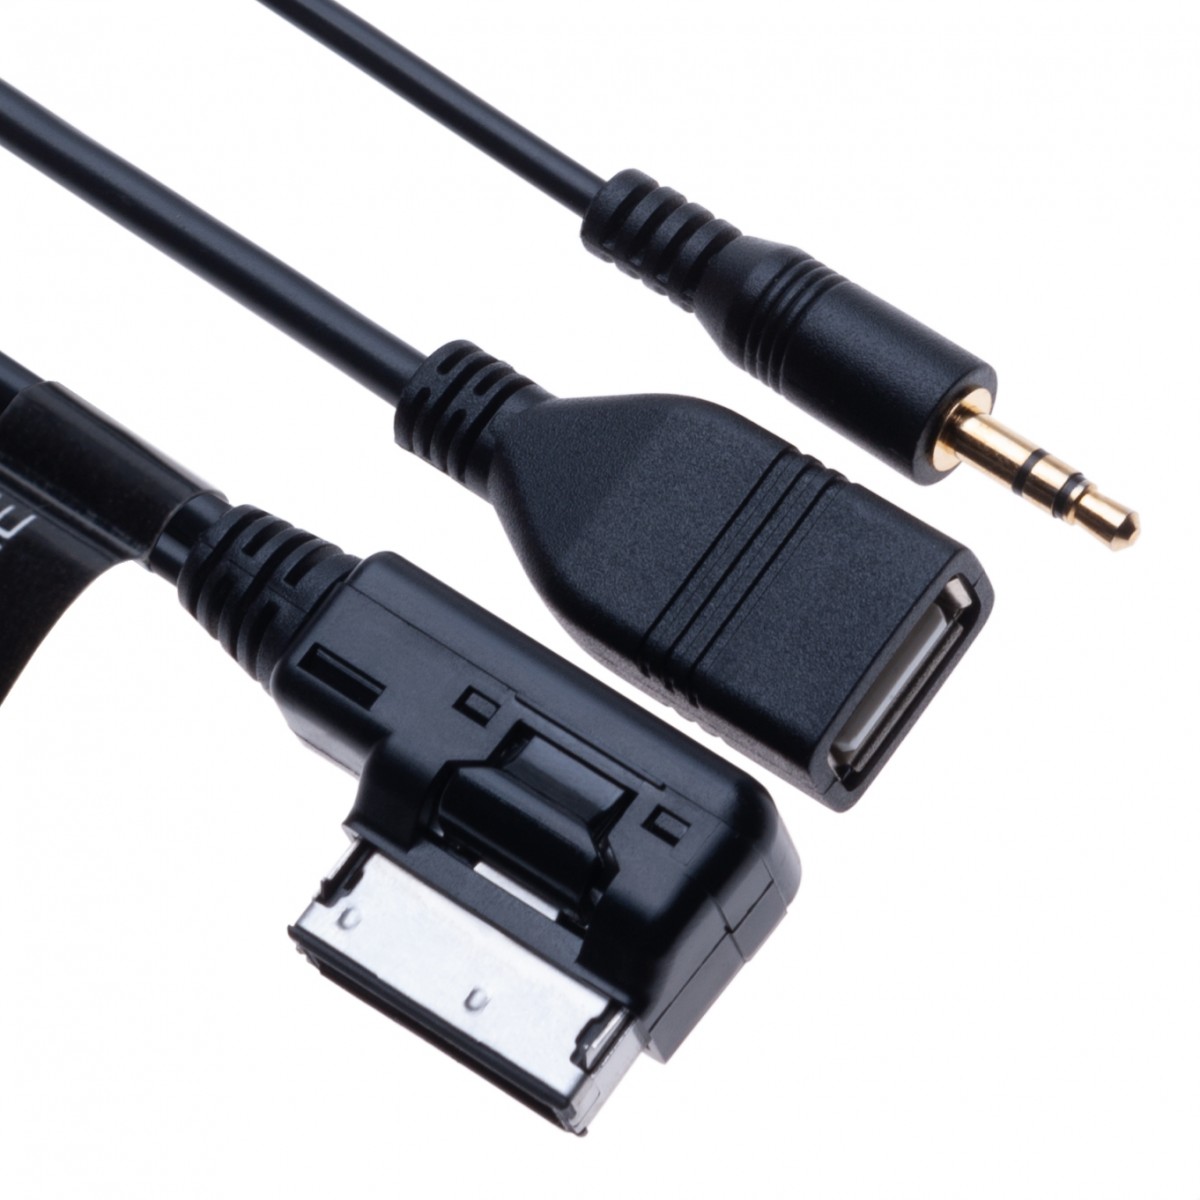 2008-2016 AMI Music Interface Cable for MMI 2G 3G RMC MIB Audio Accessories Lead USB Car Charg-er Adatper Compatible for IP 11 X i8 i7 for Audi A3 A4 A5 A6 S4 S6 A7 Q3 Q5 Q7 A8 TT 